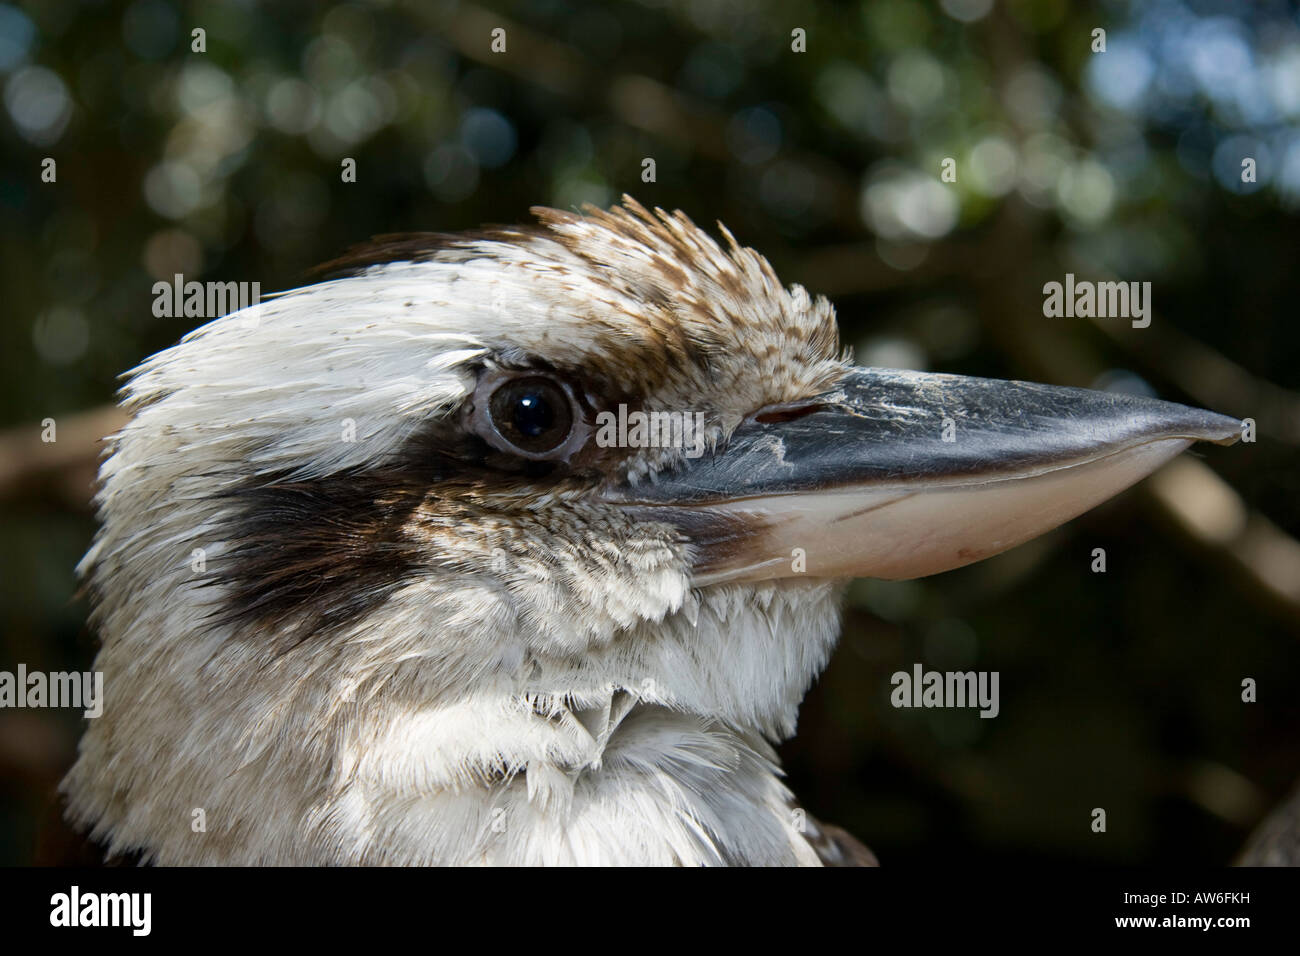 Kookaburra is the common name for a squat long tailed Australian kingfisher, Dacelo navaguinae, Australia. Stock Photo